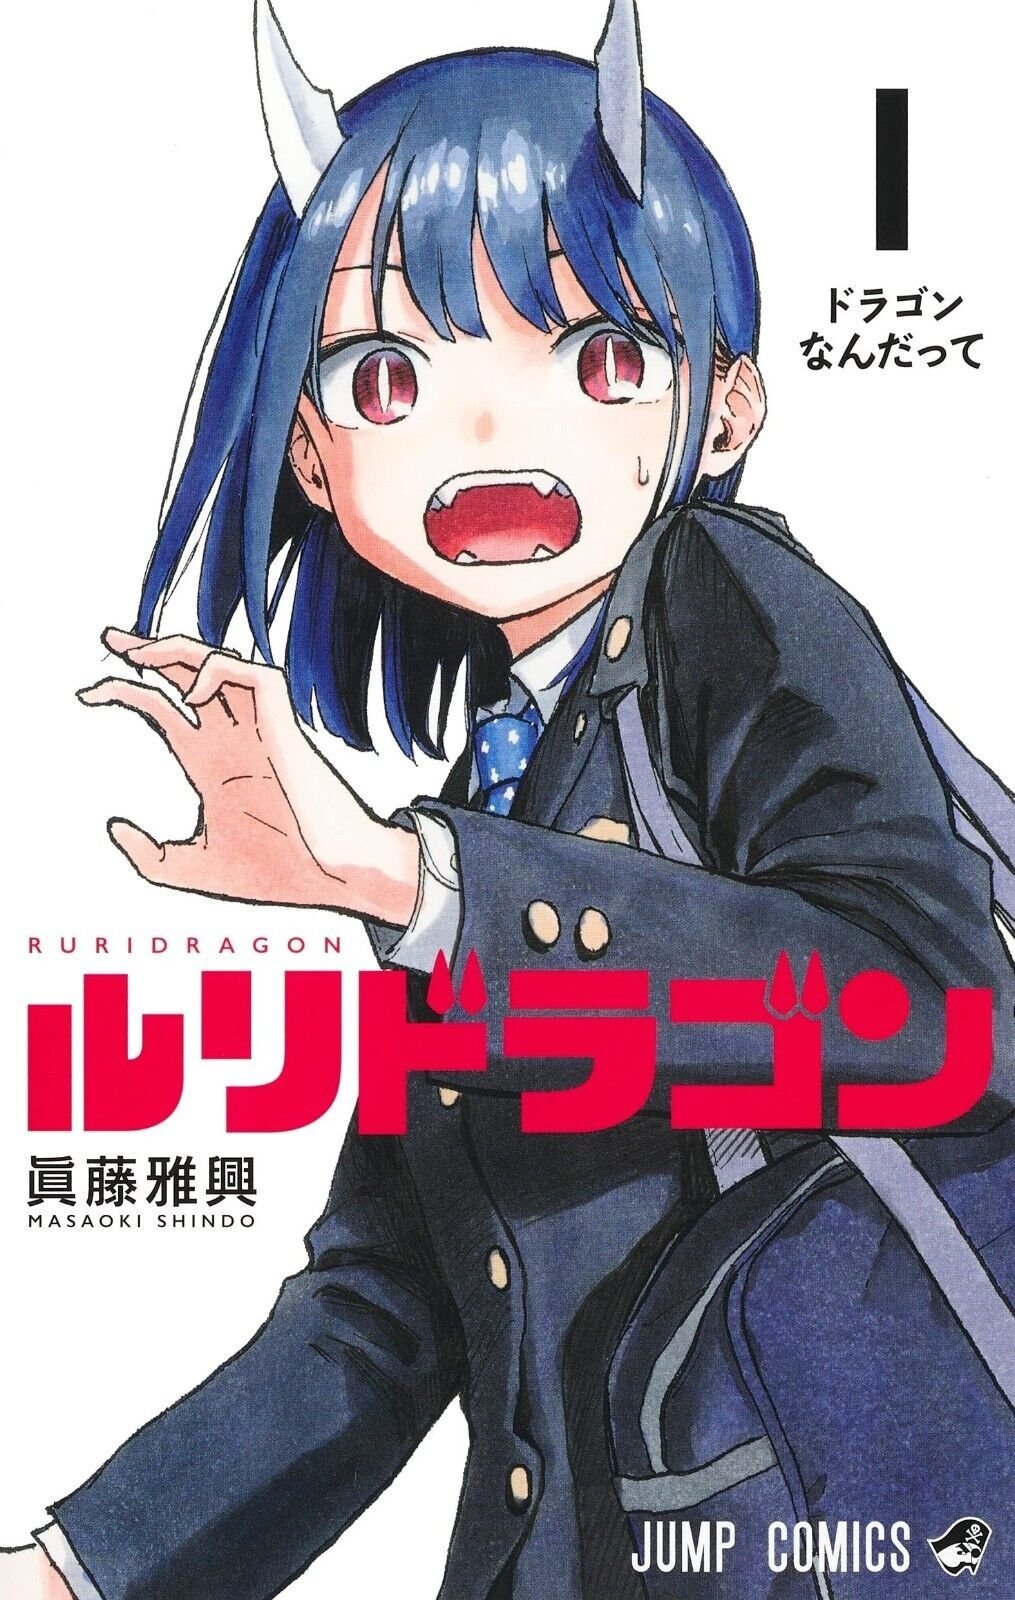 Skip and Loafer 7 Japanese comic manga anime Misaki Takamatsu